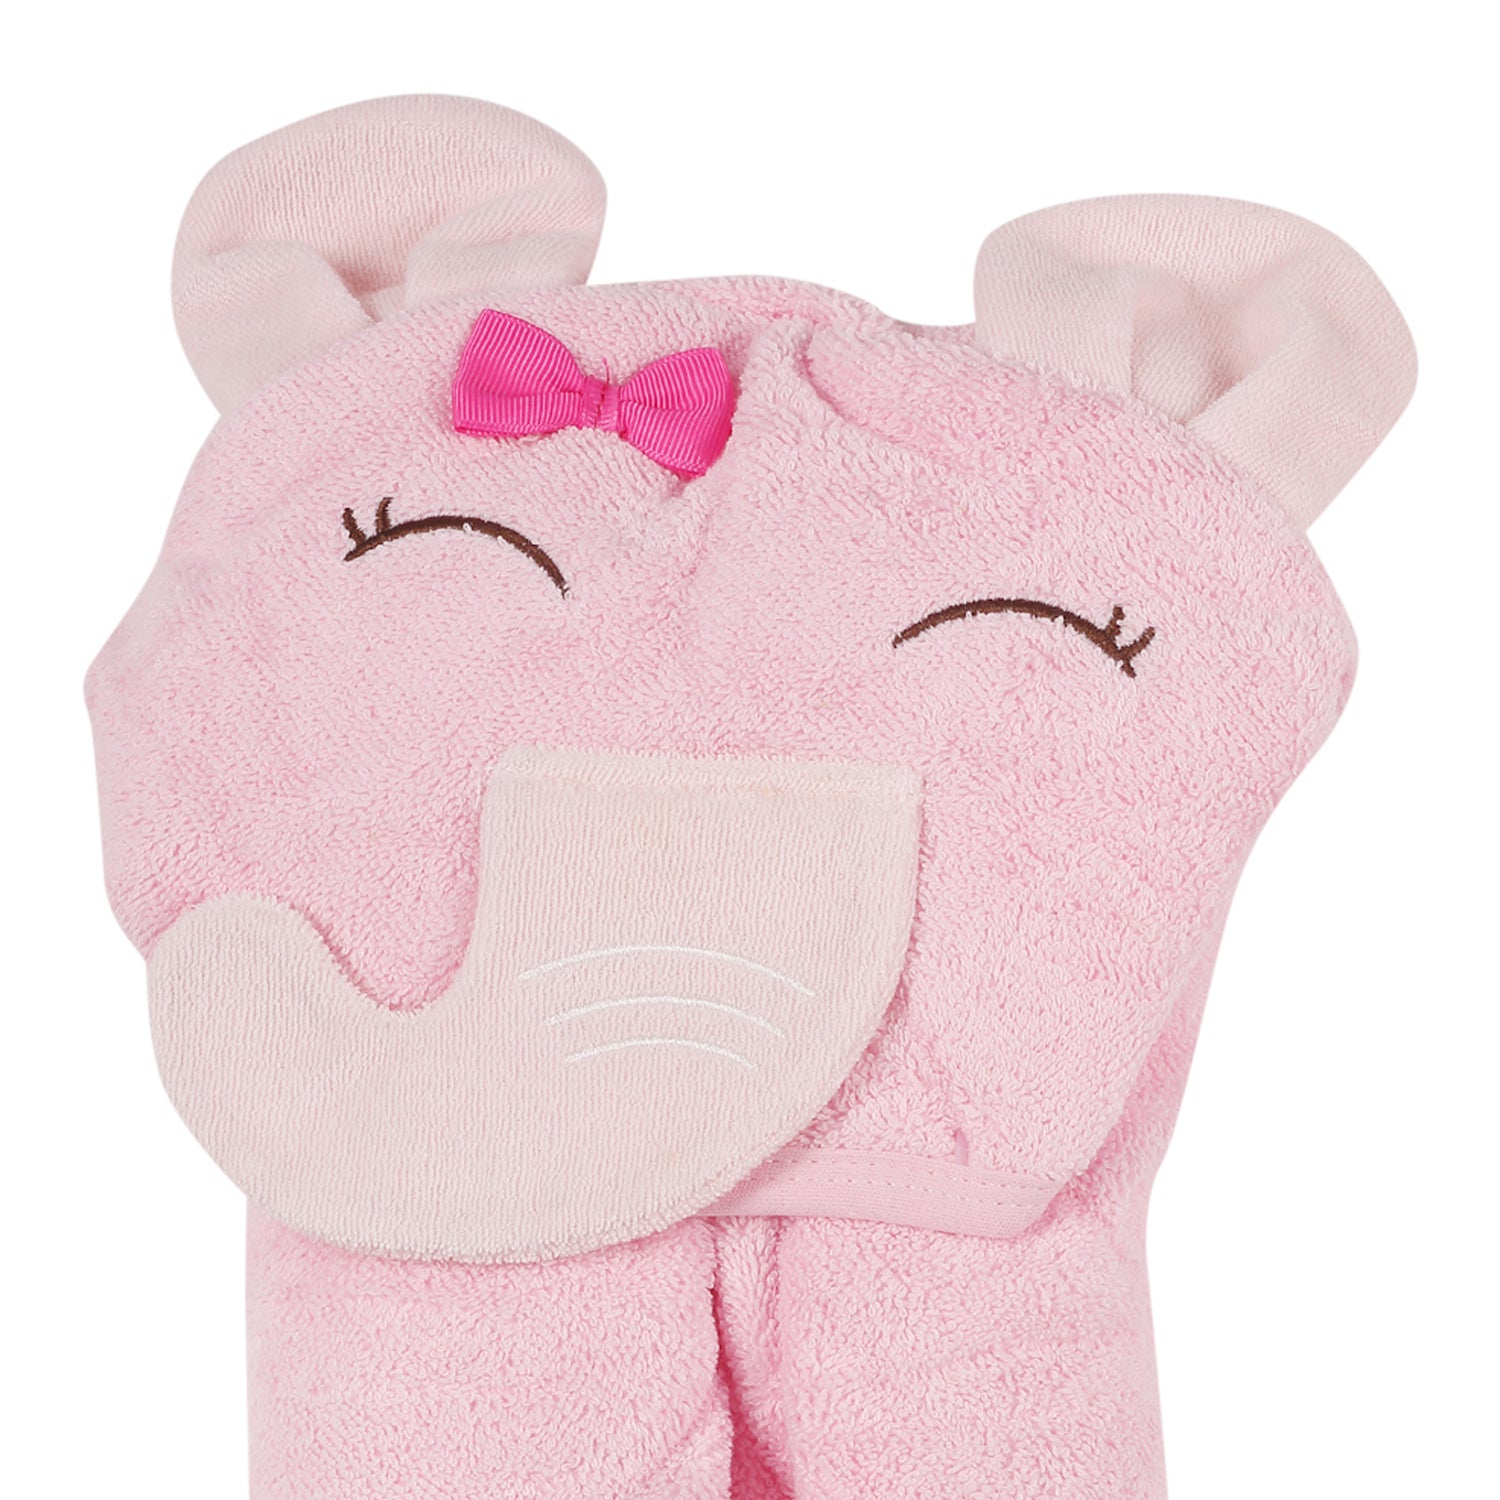 Elephant Pink Hooded Towel - Baby Moo